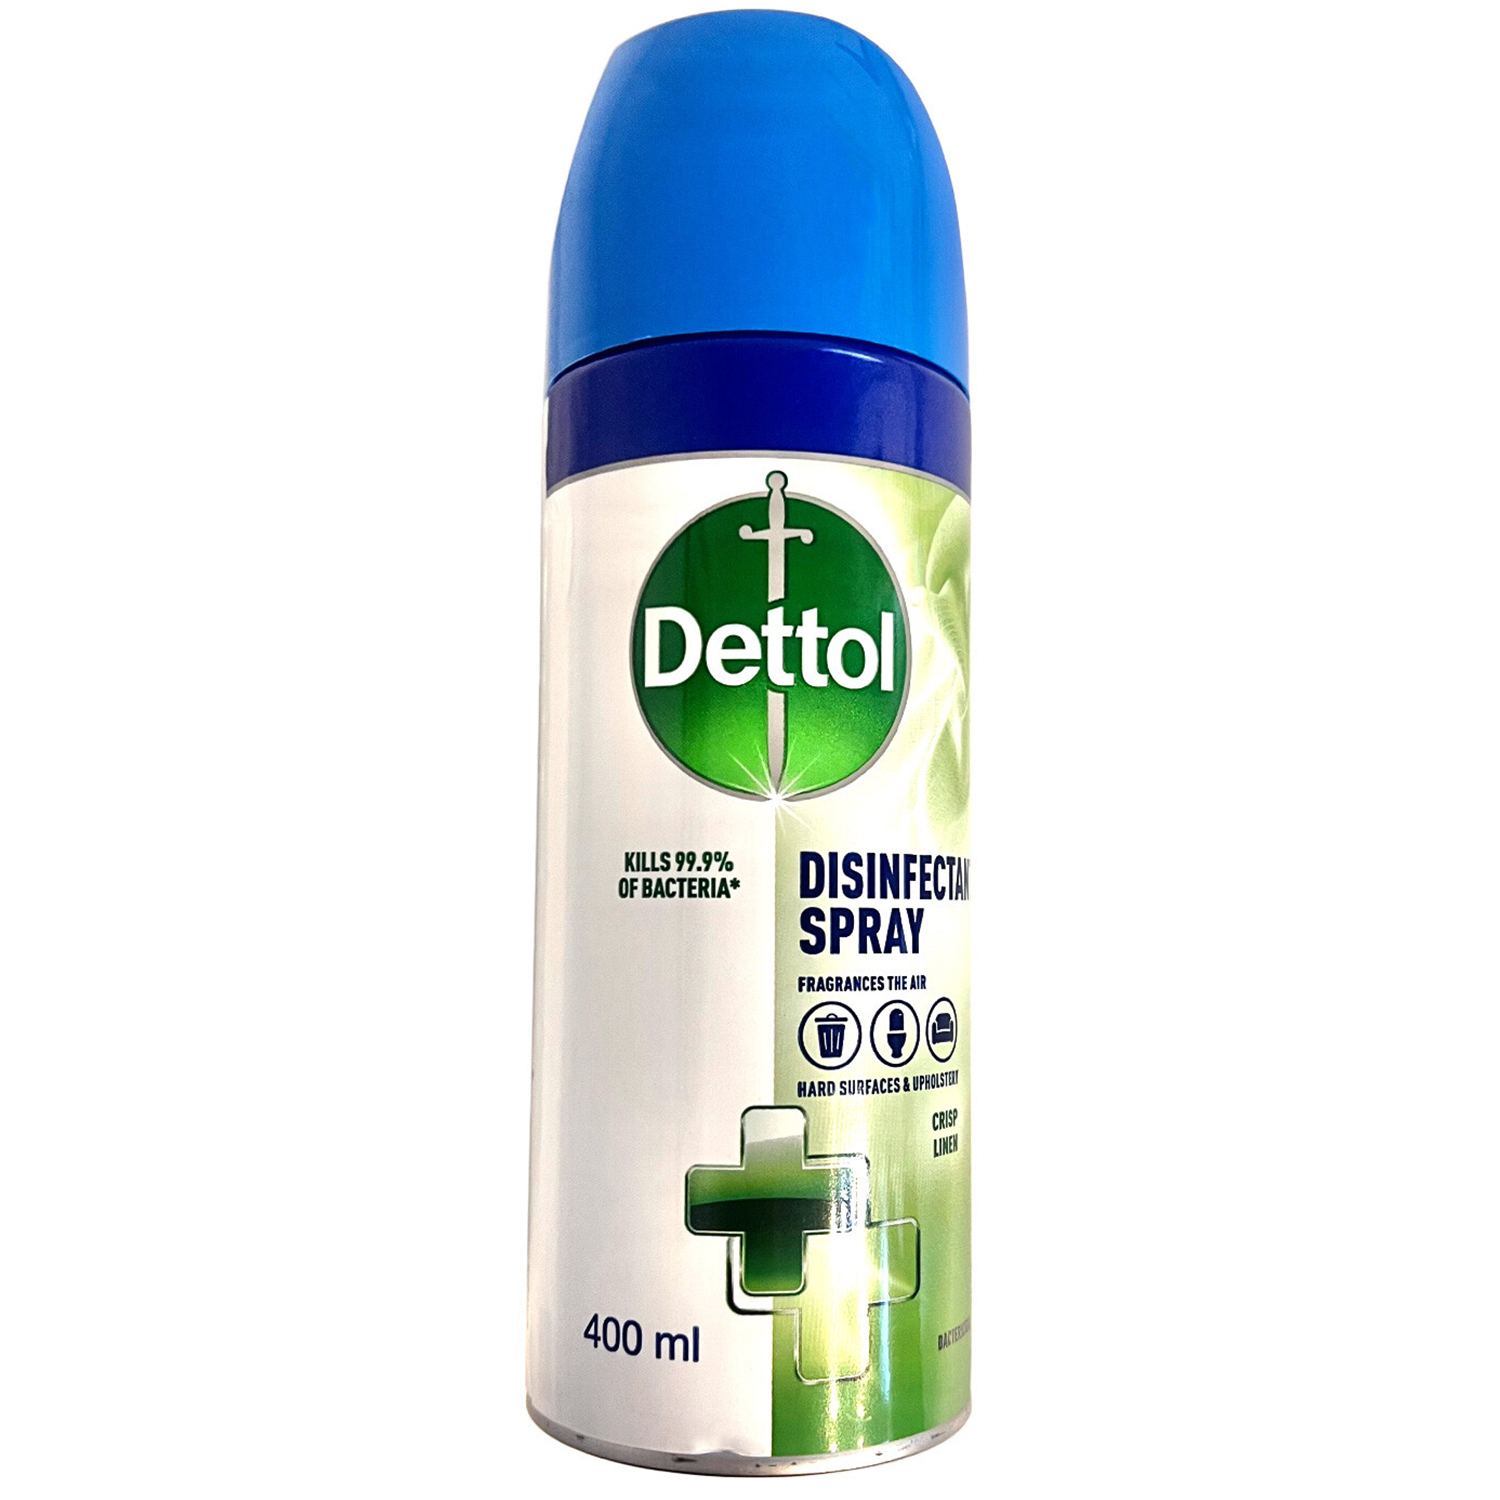 Dettol Disinfectant Spray Image